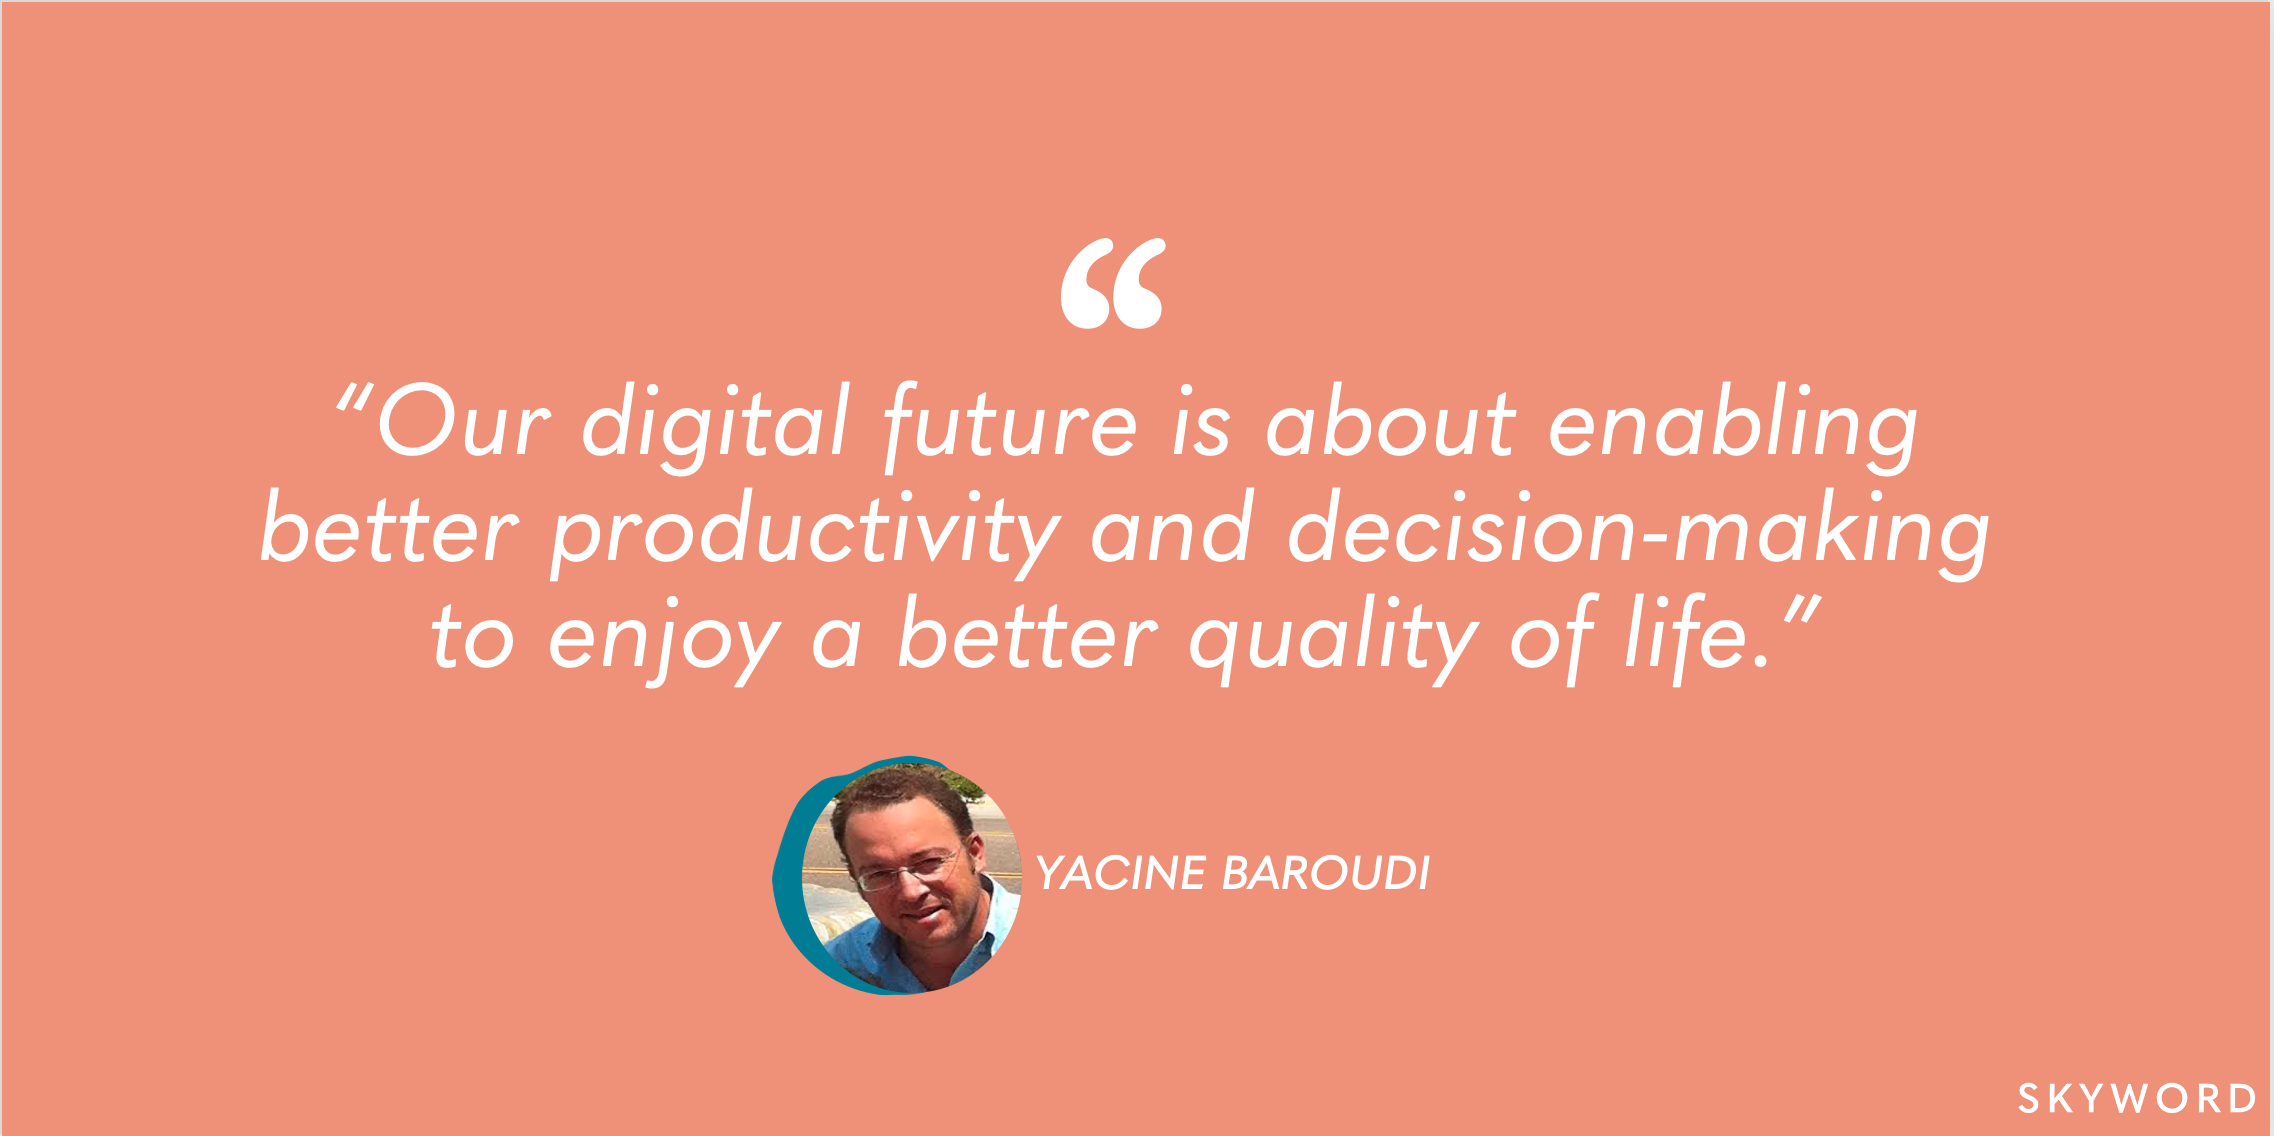 yacine baroudi innovation quote